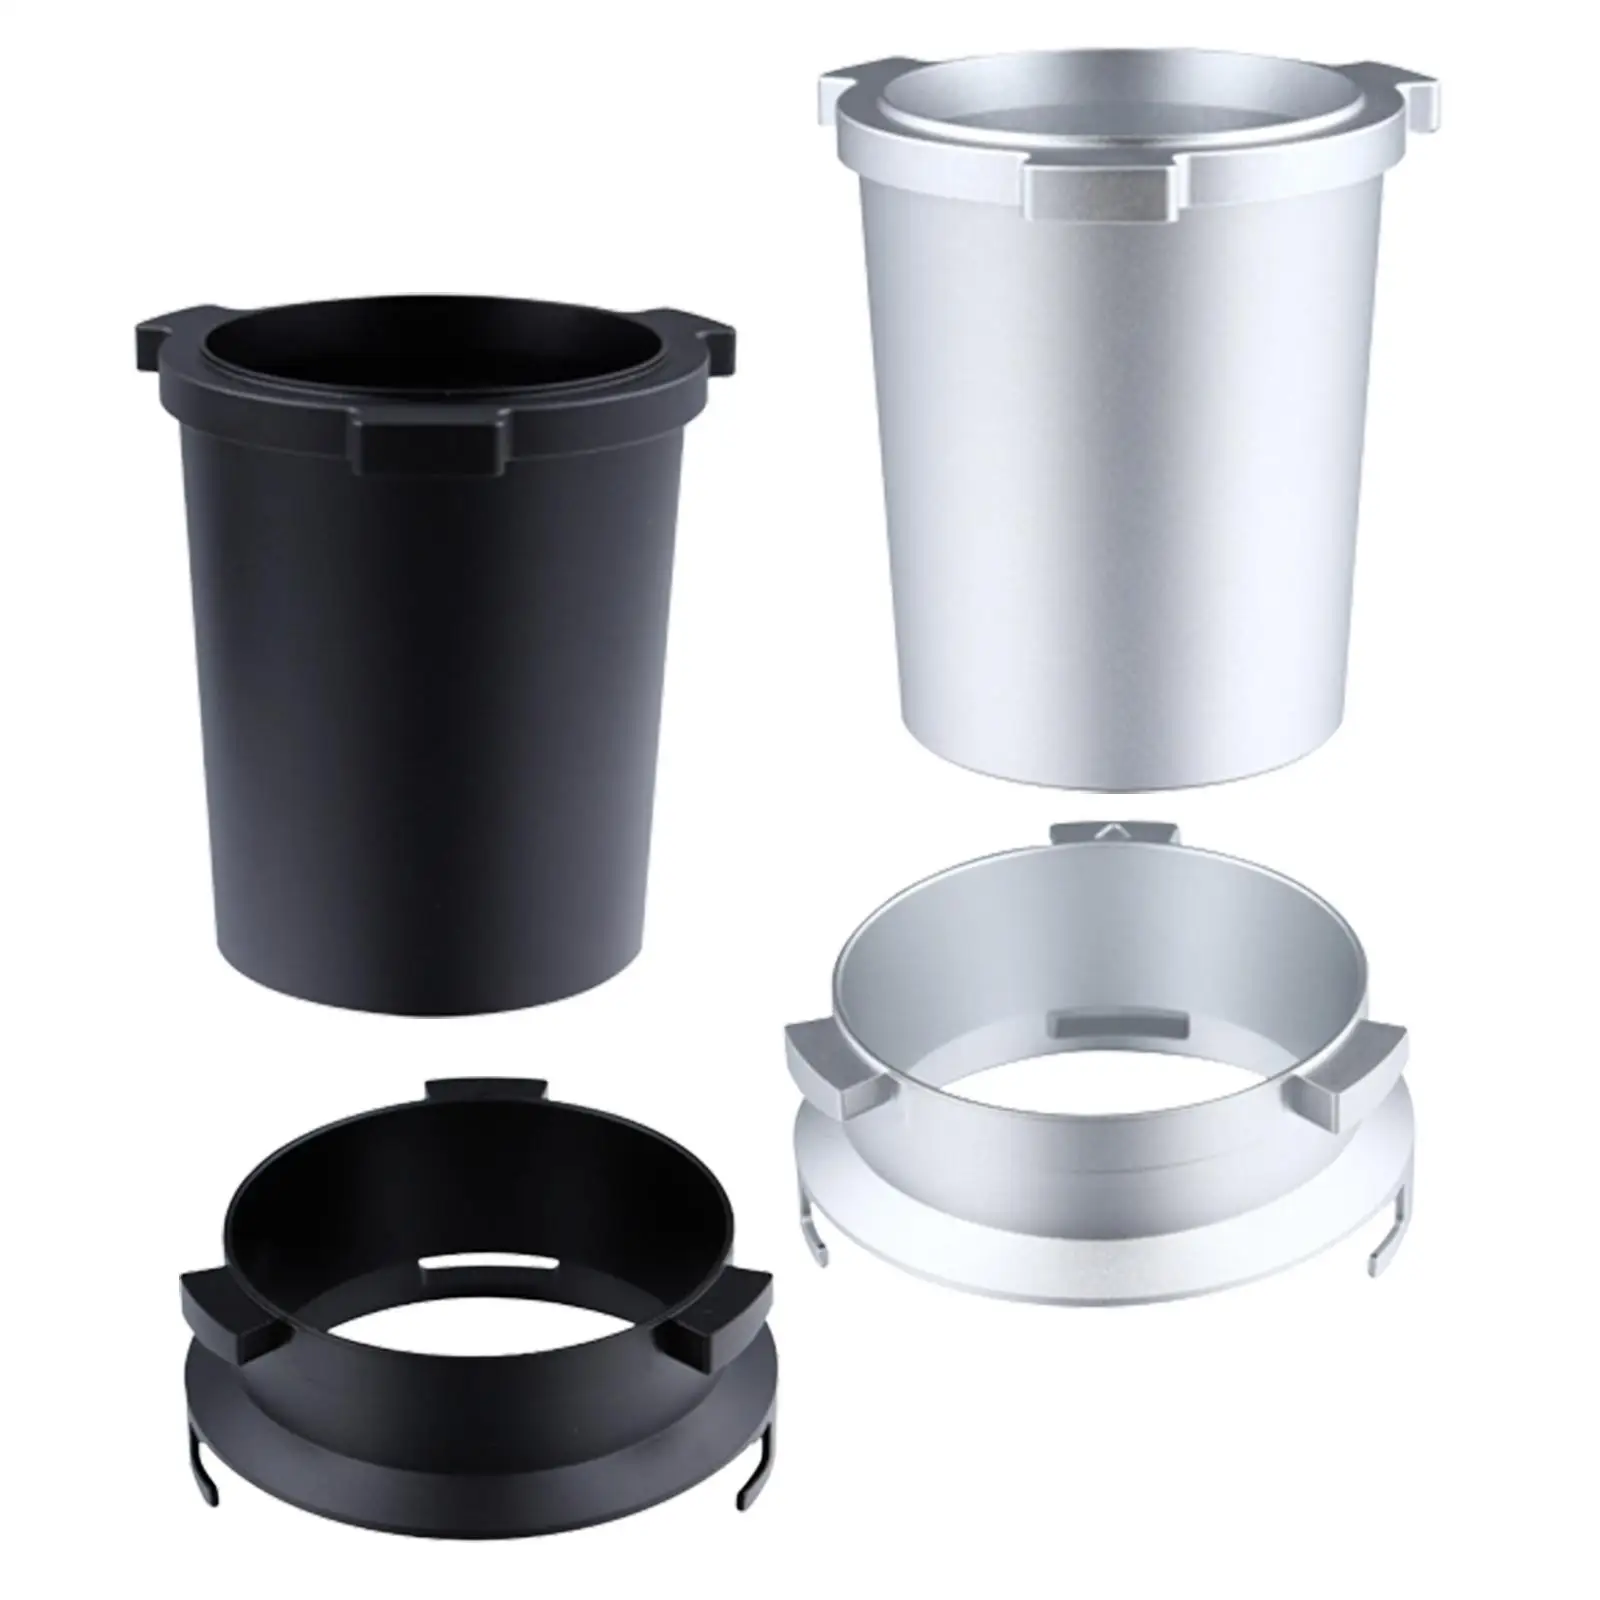 Dosing Cup Practical Binaural Design Compact Coffee Tamper DIY Tools for Househo